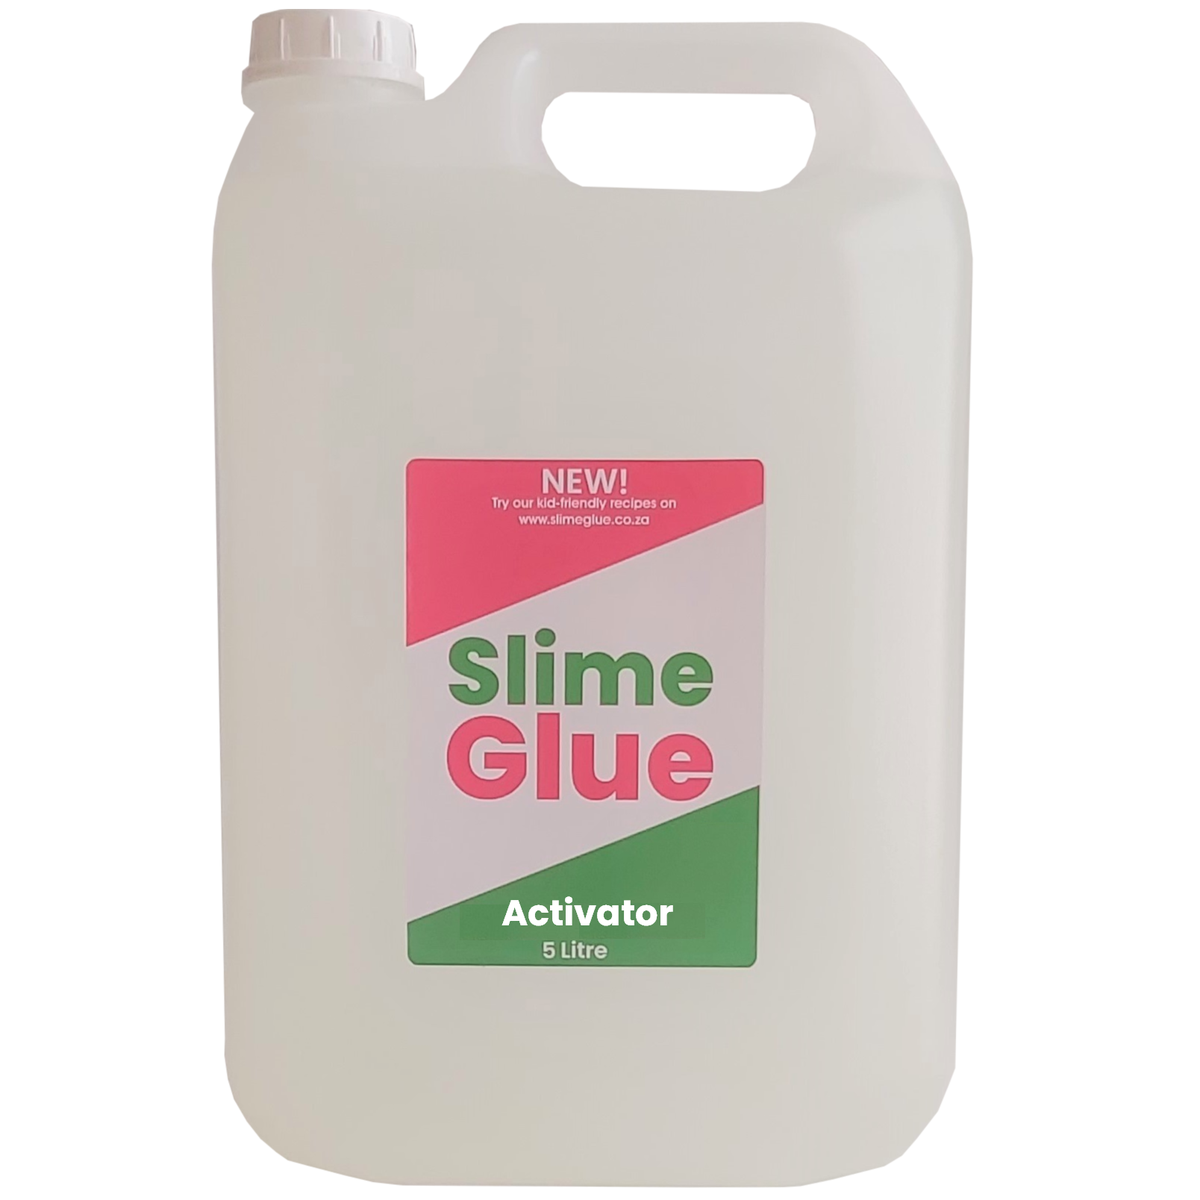 Slime Glue Activator 5 Litre Buy Online In South Africa